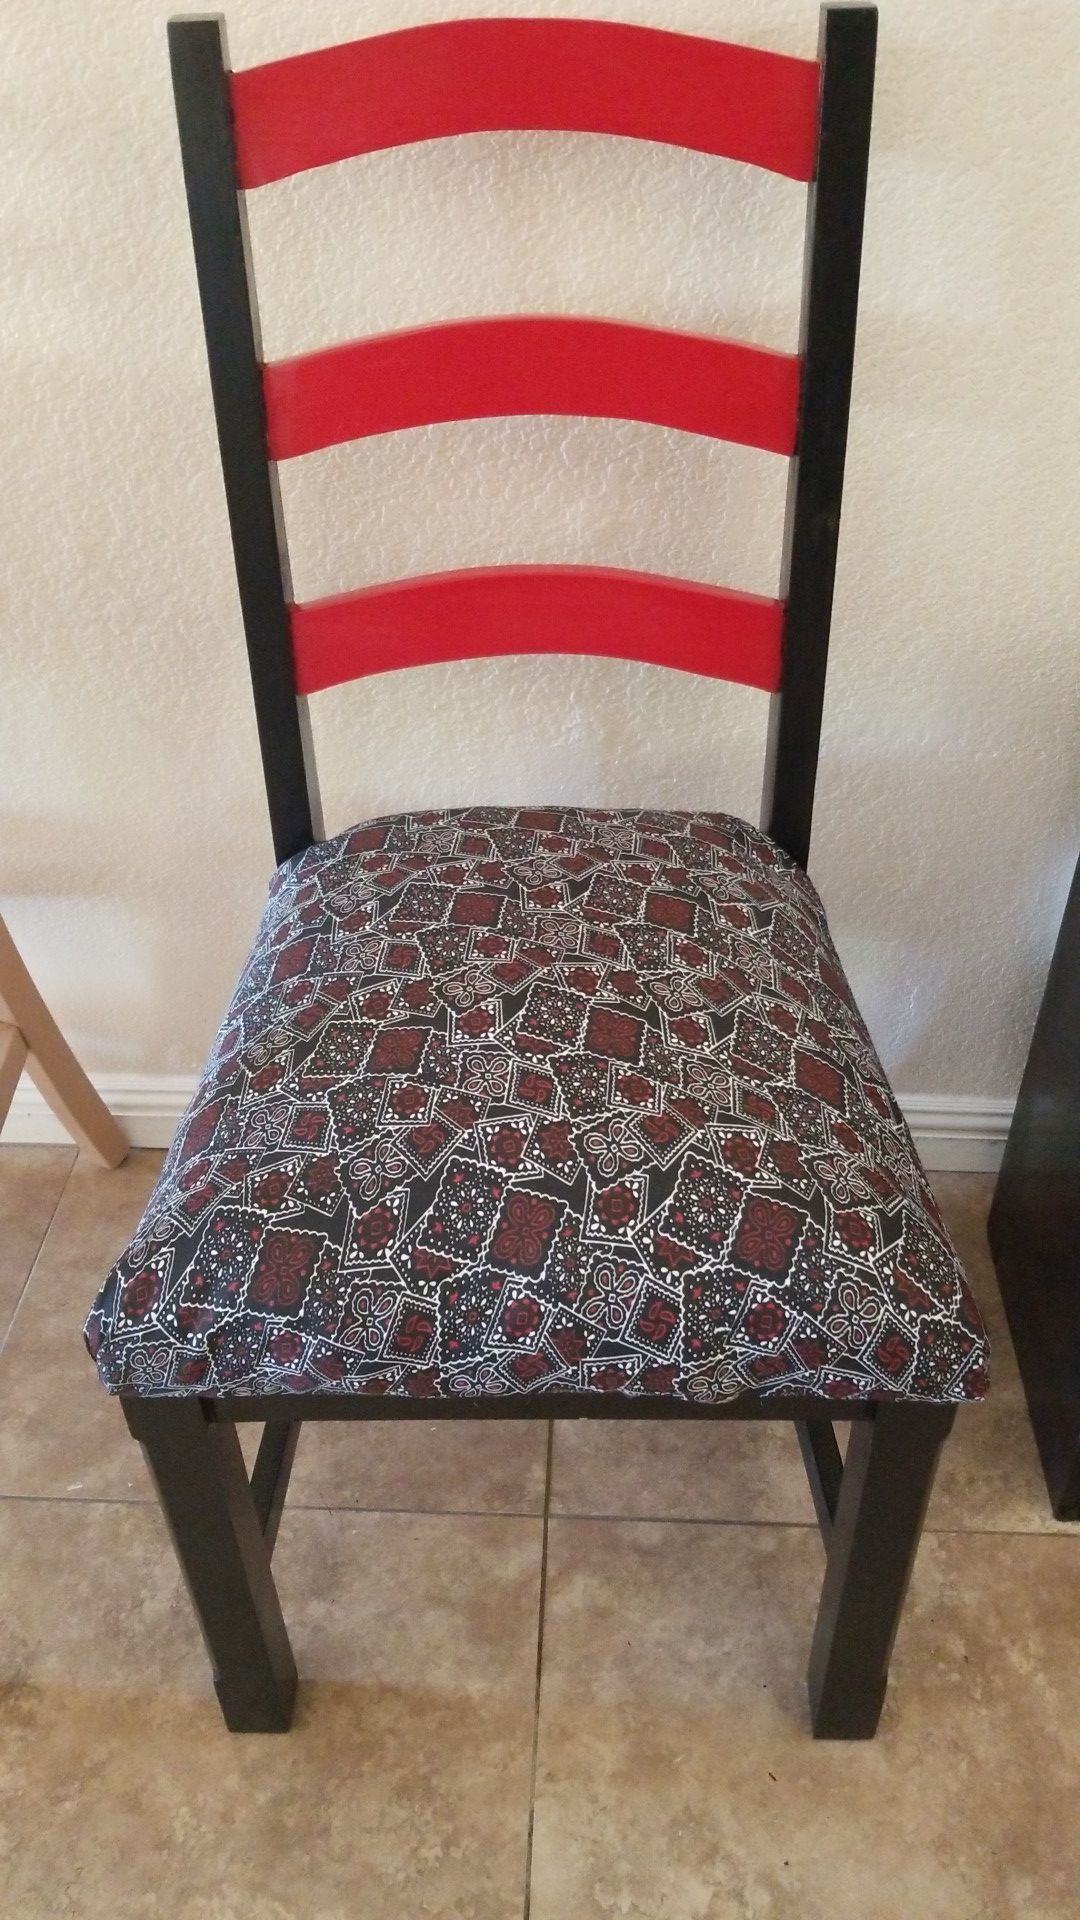 Single chair